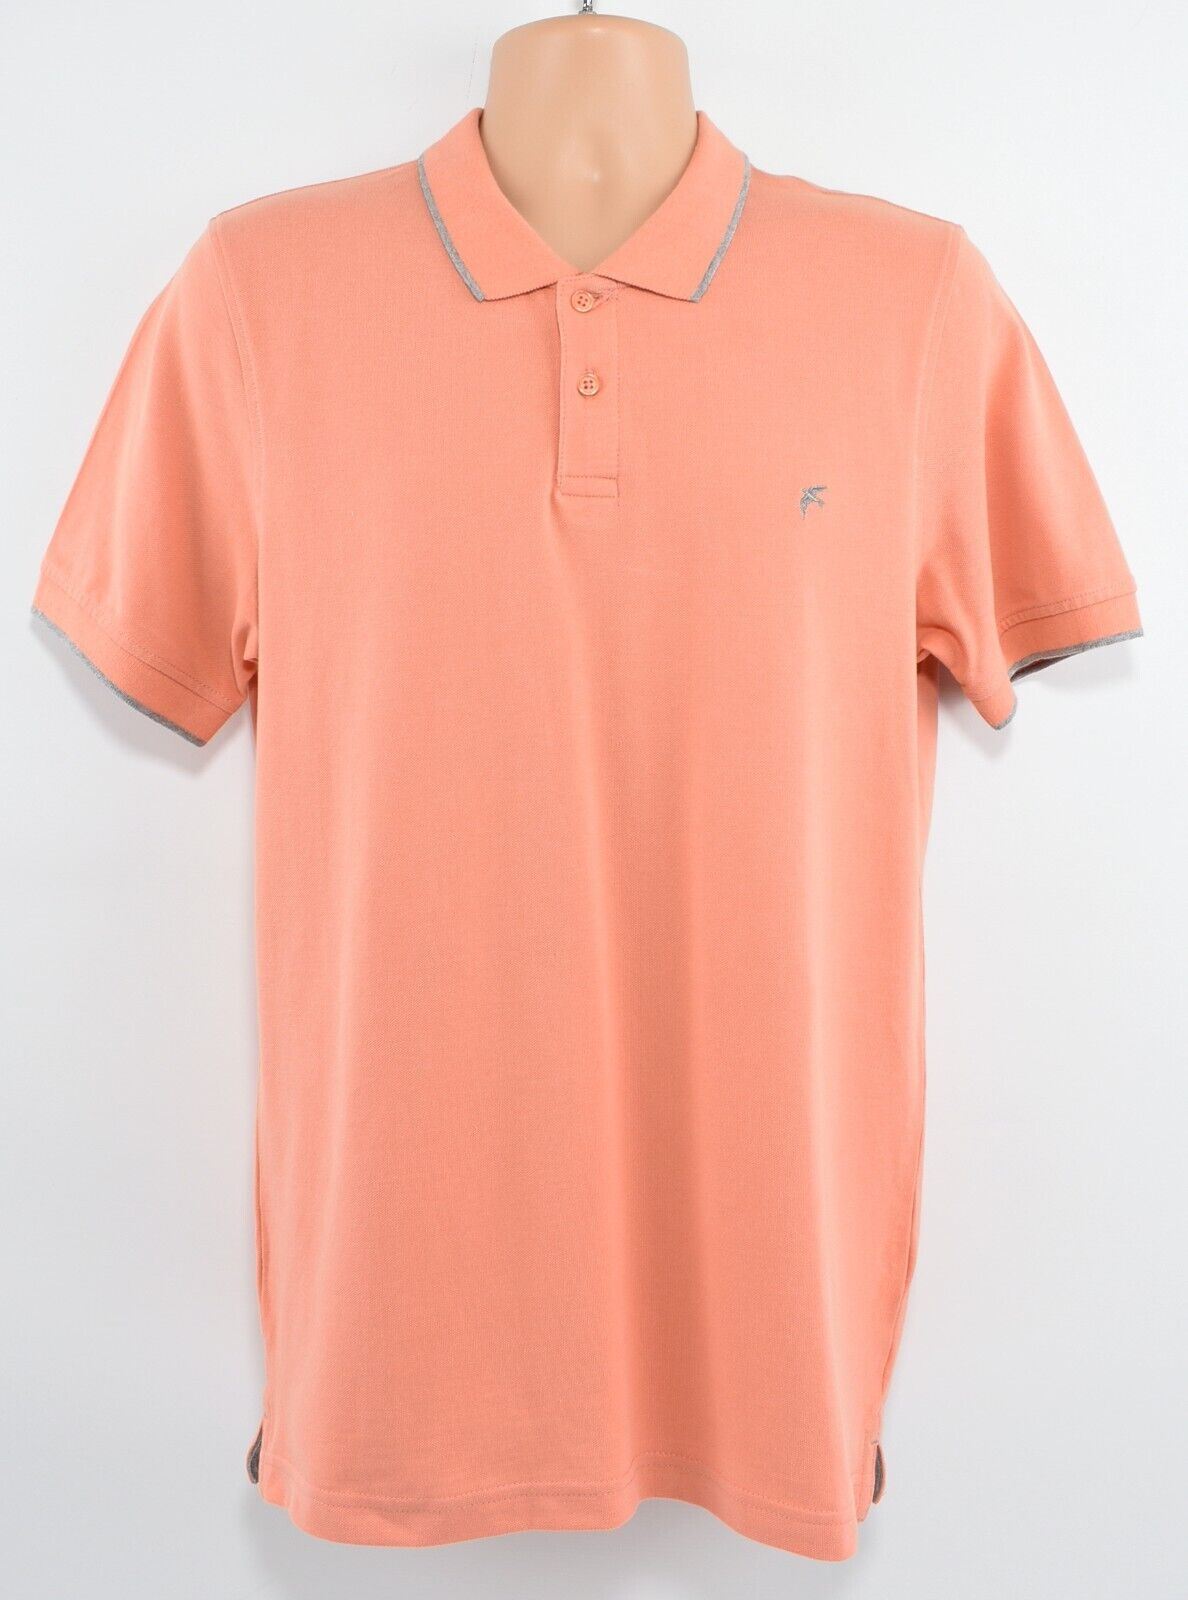 RACING GREEN Men's Short Sleeve Polo Shirt, Salmon Pink, size S